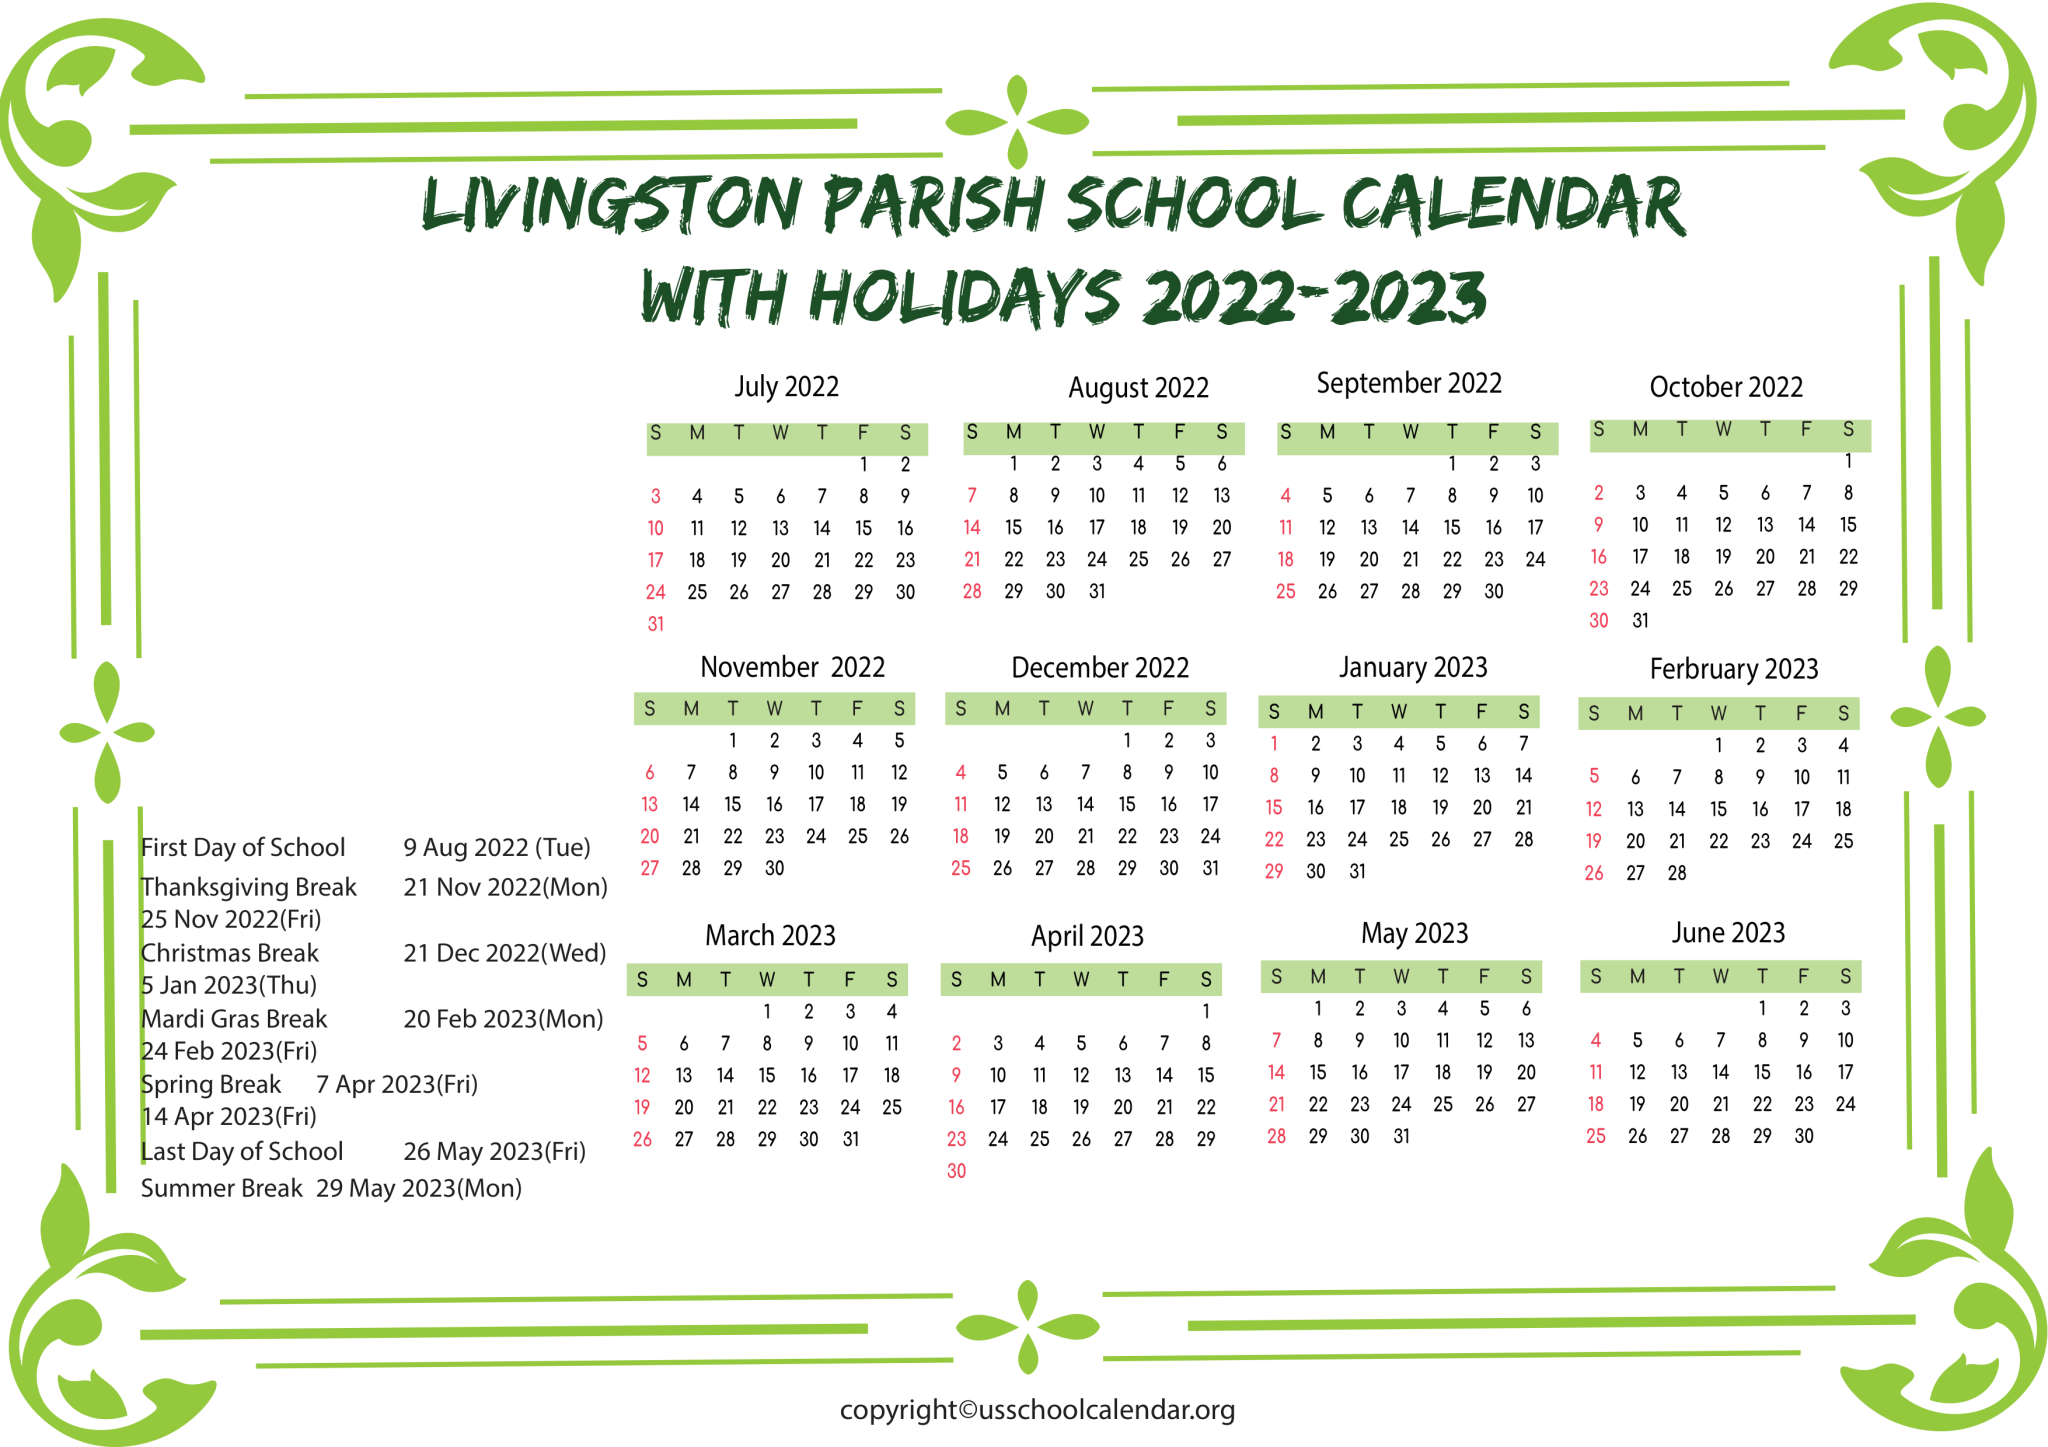 livingston-parish-school-calendar-with-holidays-2022-2023